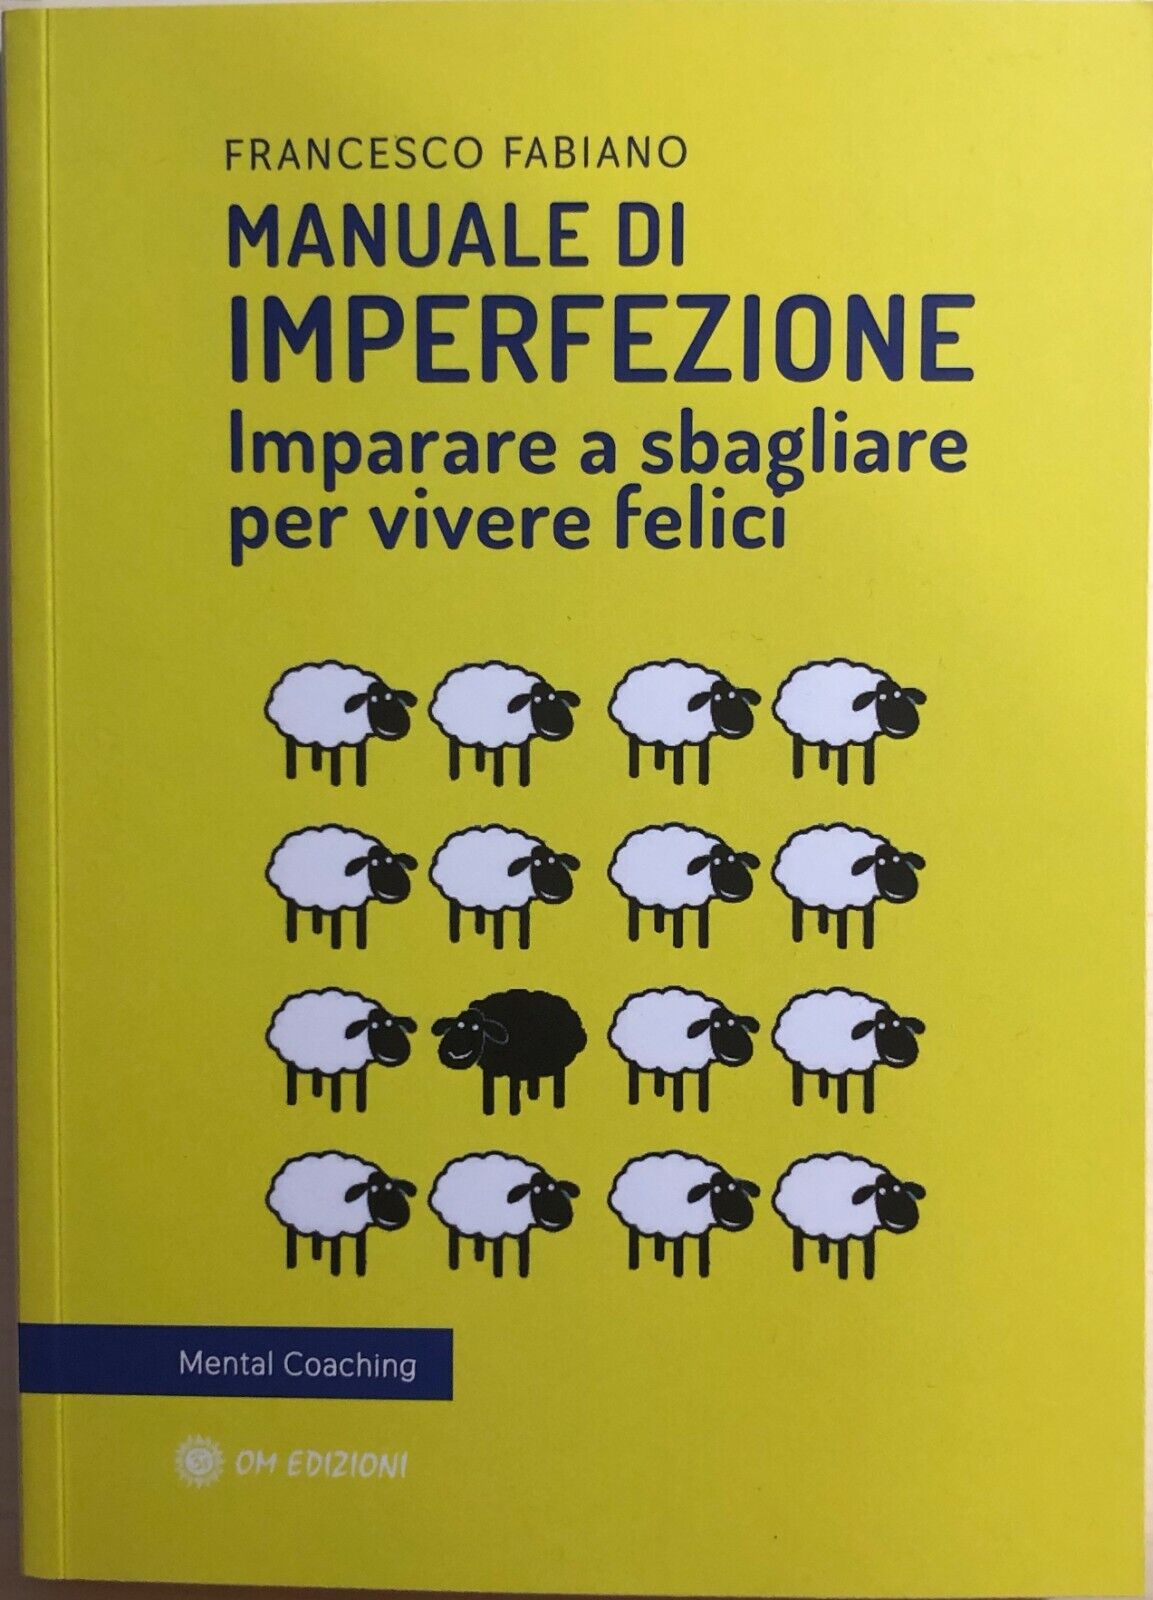 Manuale di imperfezione di Francesco Fabiano, 2020, OM Edizioni